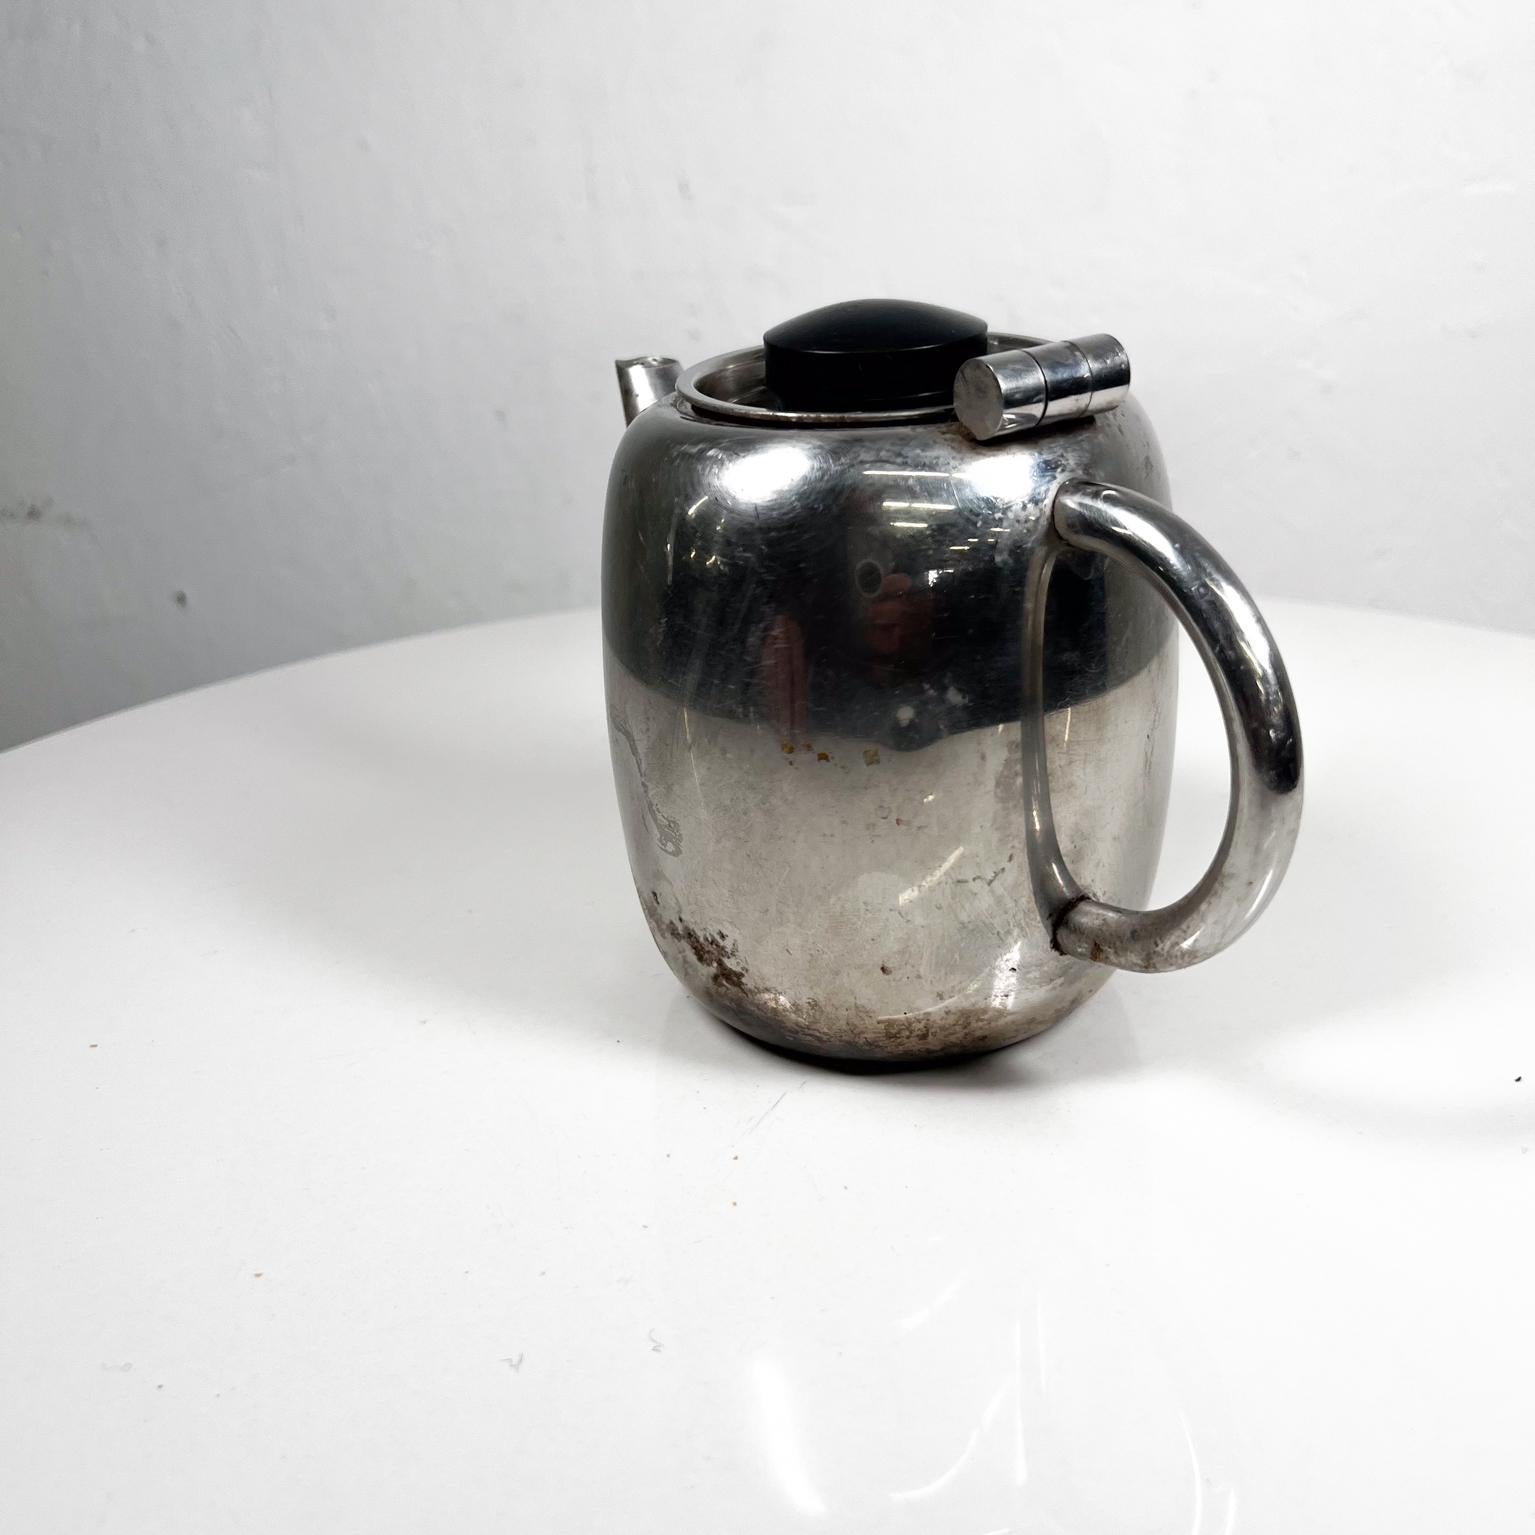 1950s Vintage Art Deco Stylish Small Tea Pot Stainless Steel 2